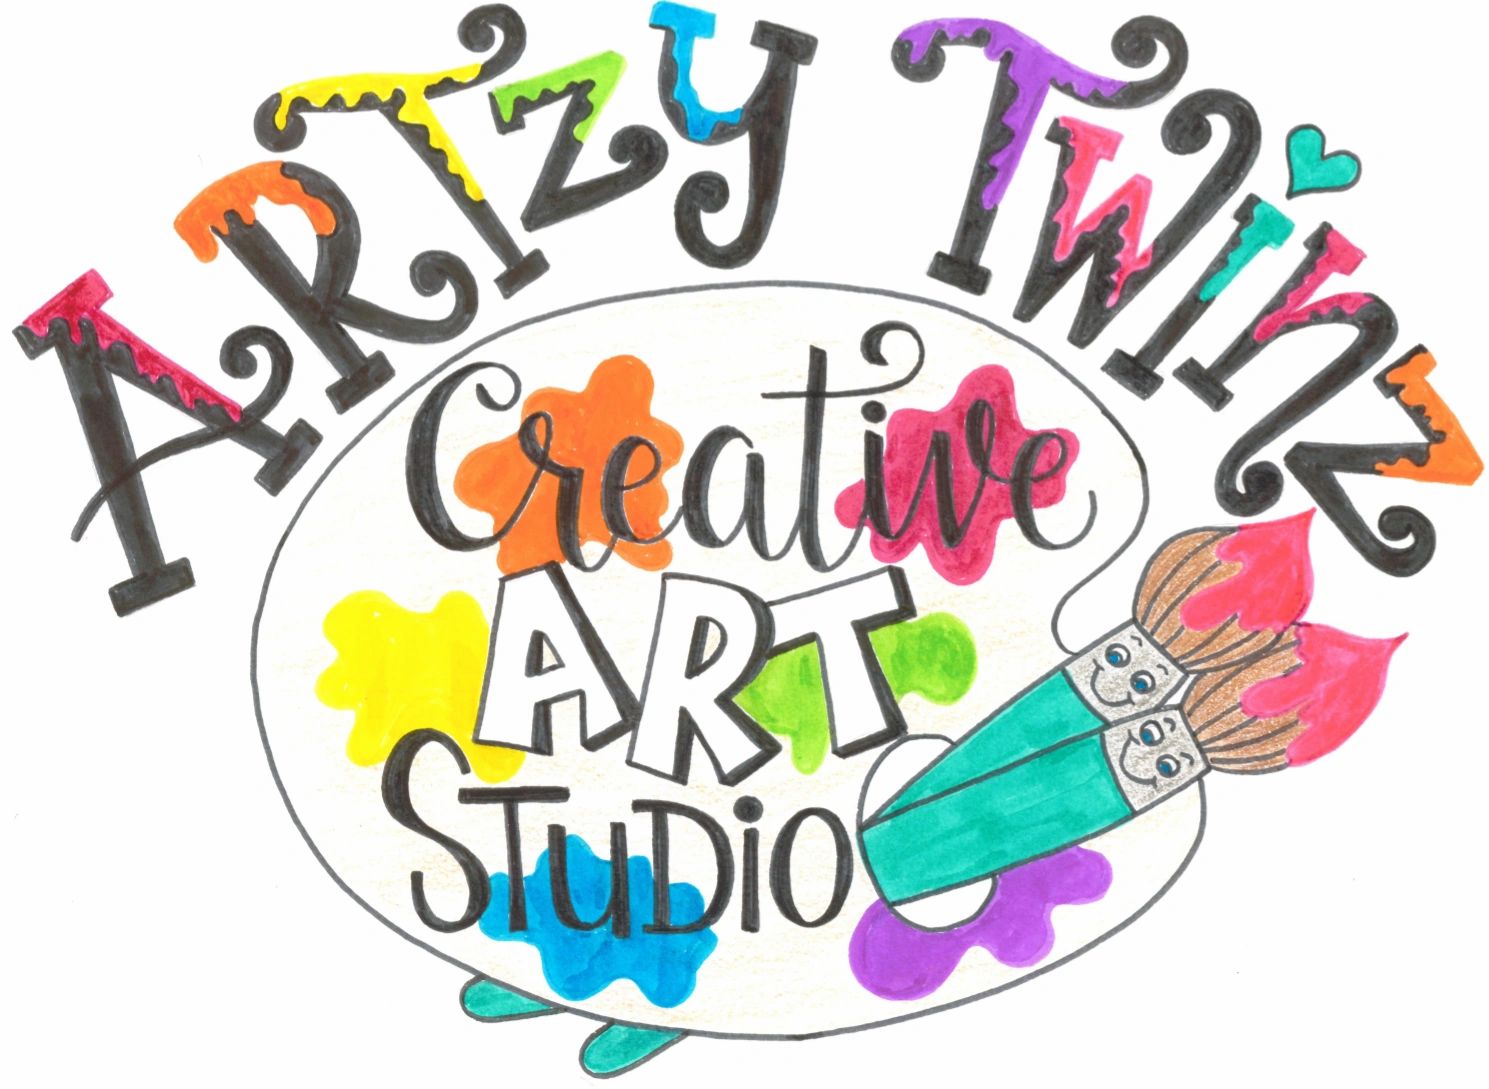 Children's Art Classes - Artzy Twinz